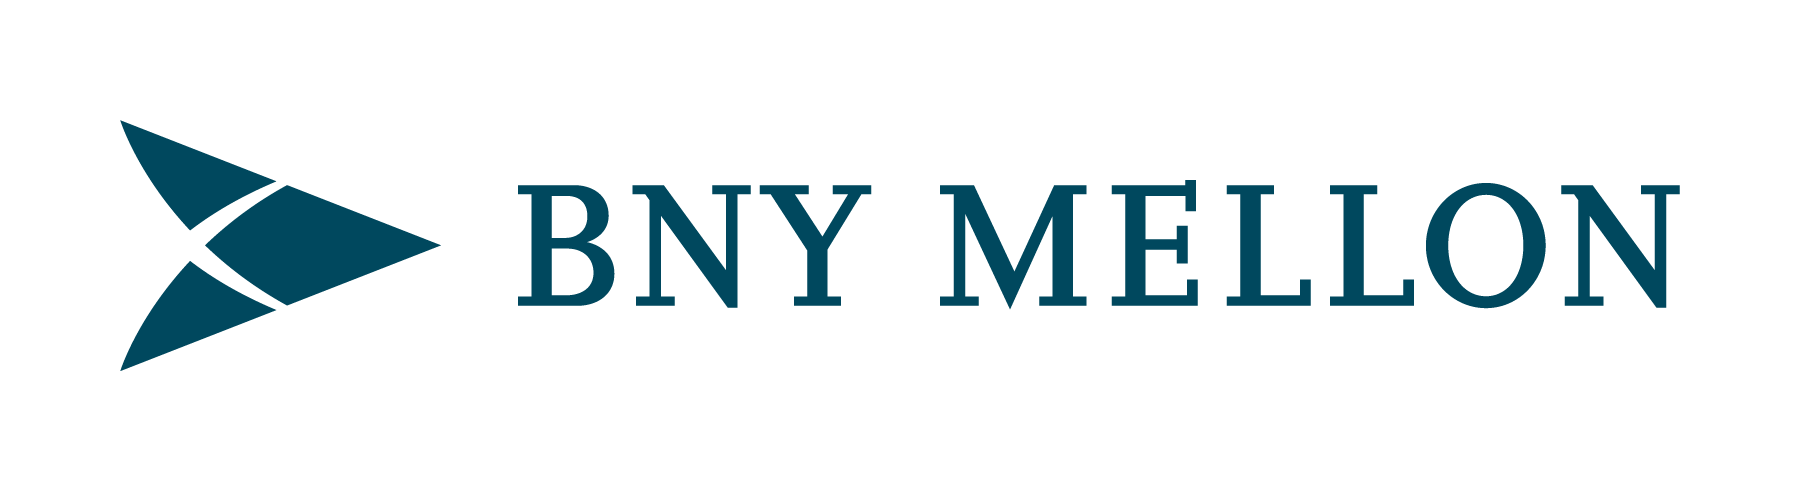 Display Image of BNY Mellon